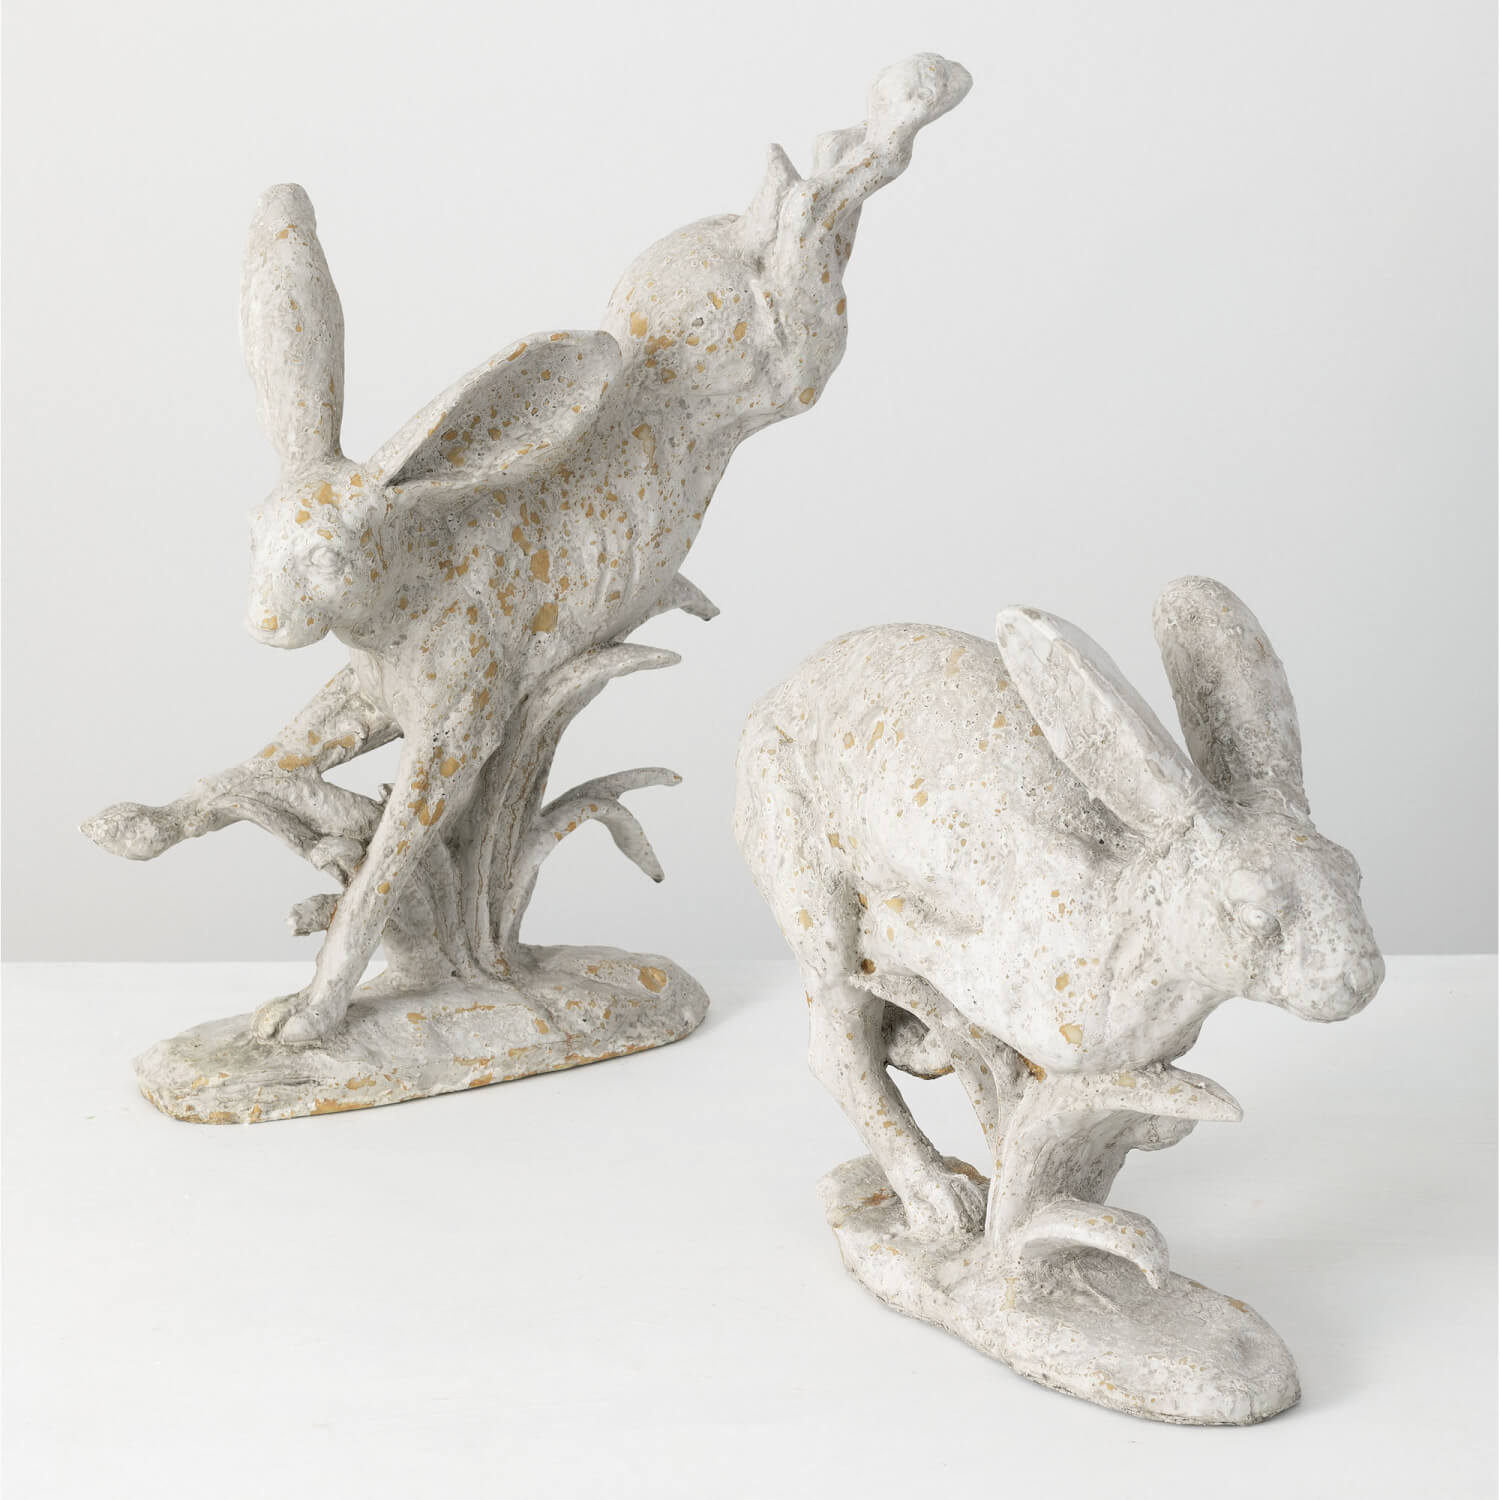 Wholesale Bunny Figurine, Novelty White Rabbits